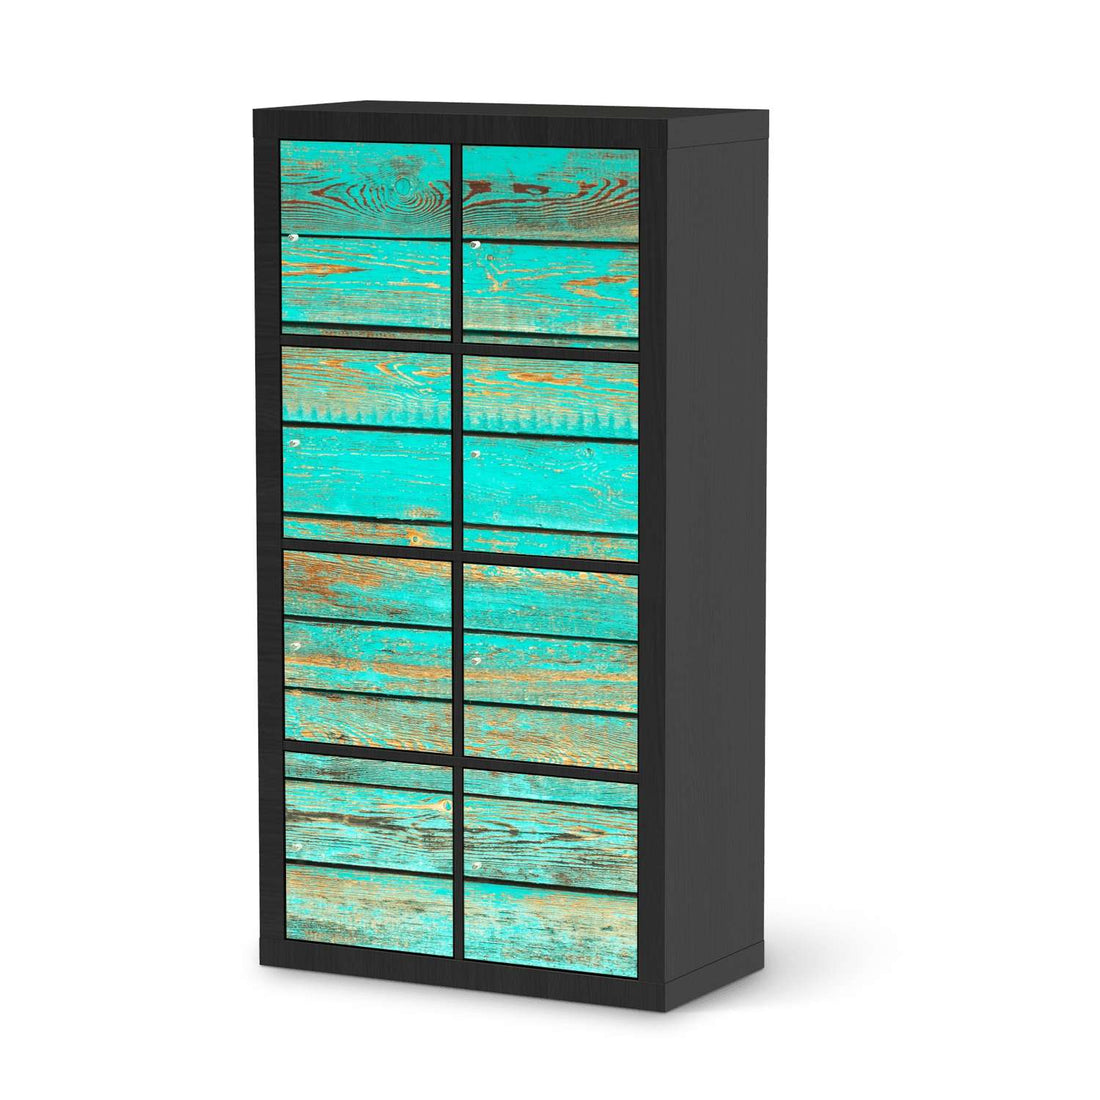 Folie für Möbel Wooden Aqua - IKEA Kallax Regal 8 Türen - schwarz